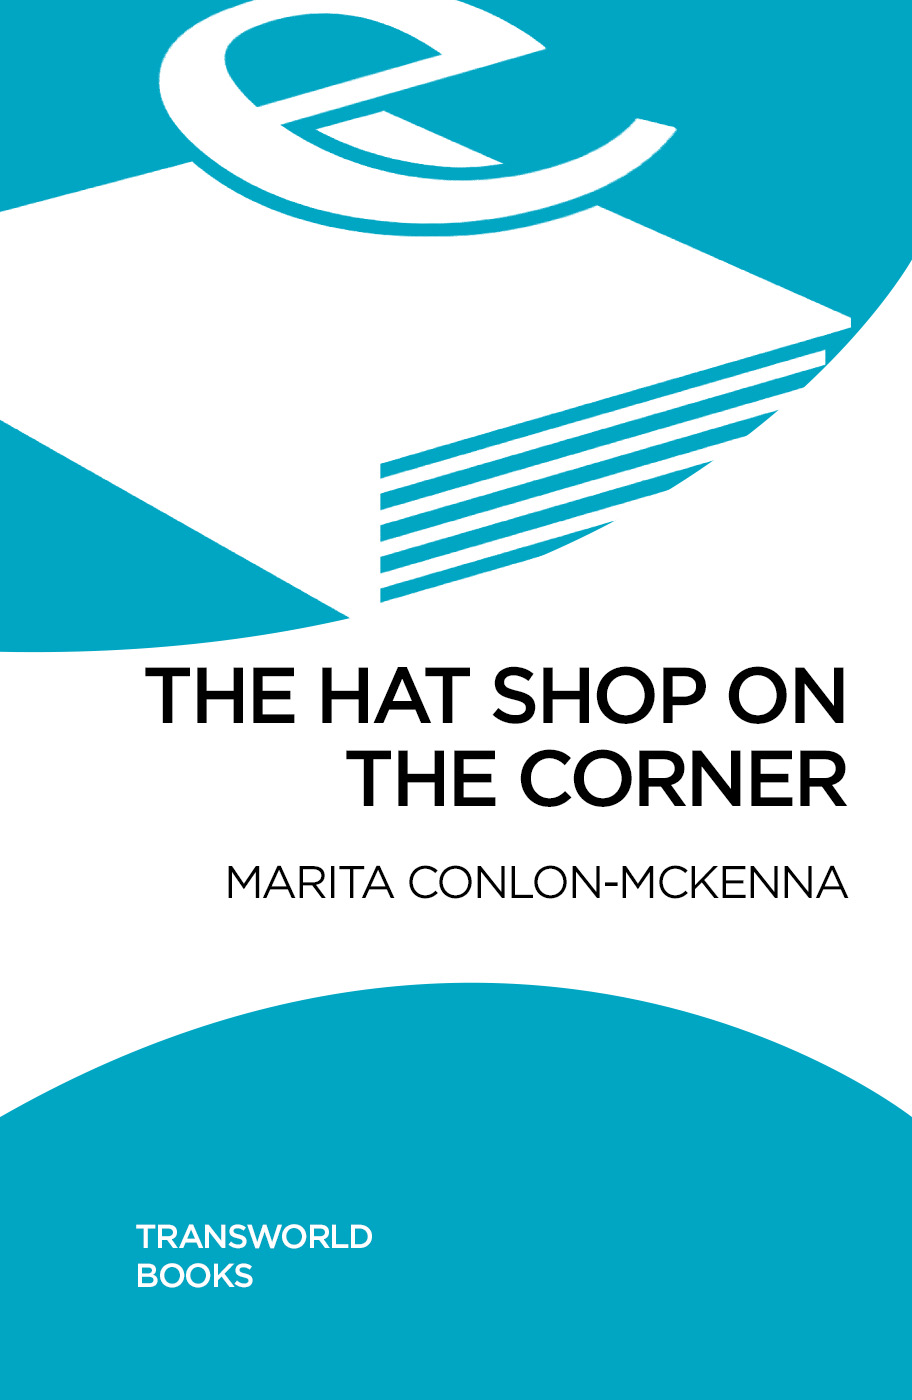 The Hat Shop on the Corner by Marita Conlon-McKenna